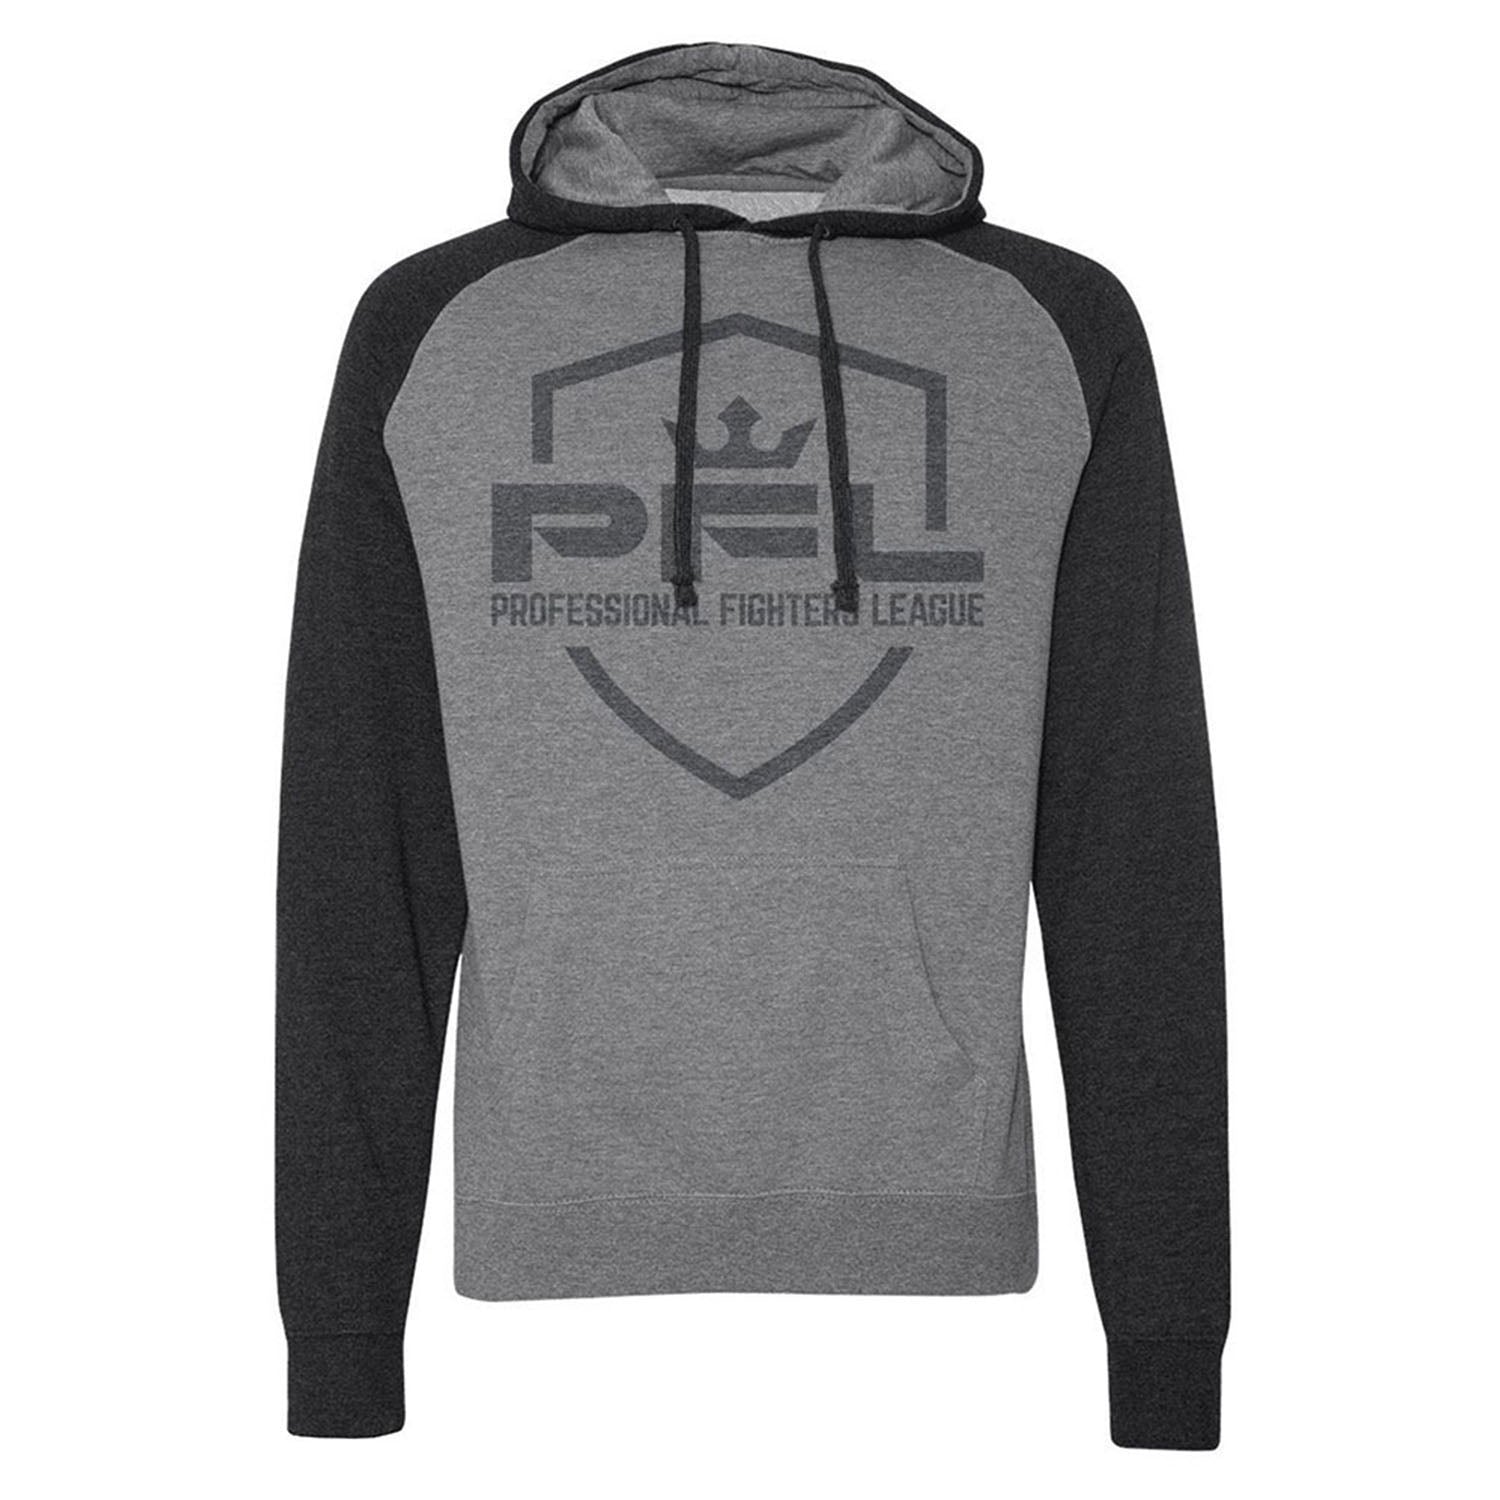 PFL Shield Logo Sweatshirt in Grey and Black - Front View